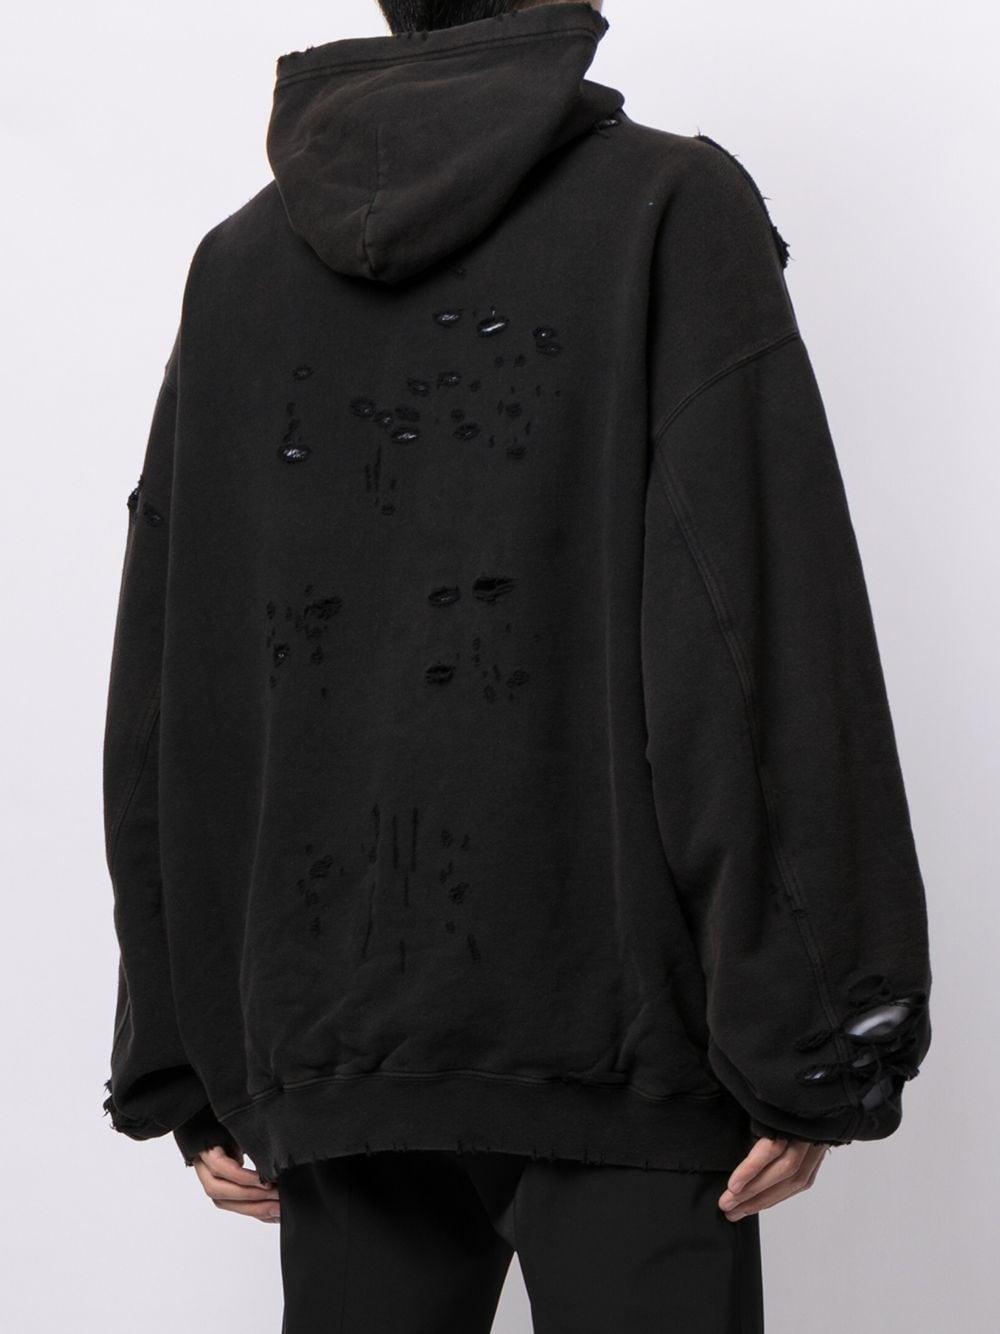 Balenciaga Ripped Oversize Logo Hoodie in Black | Lyst